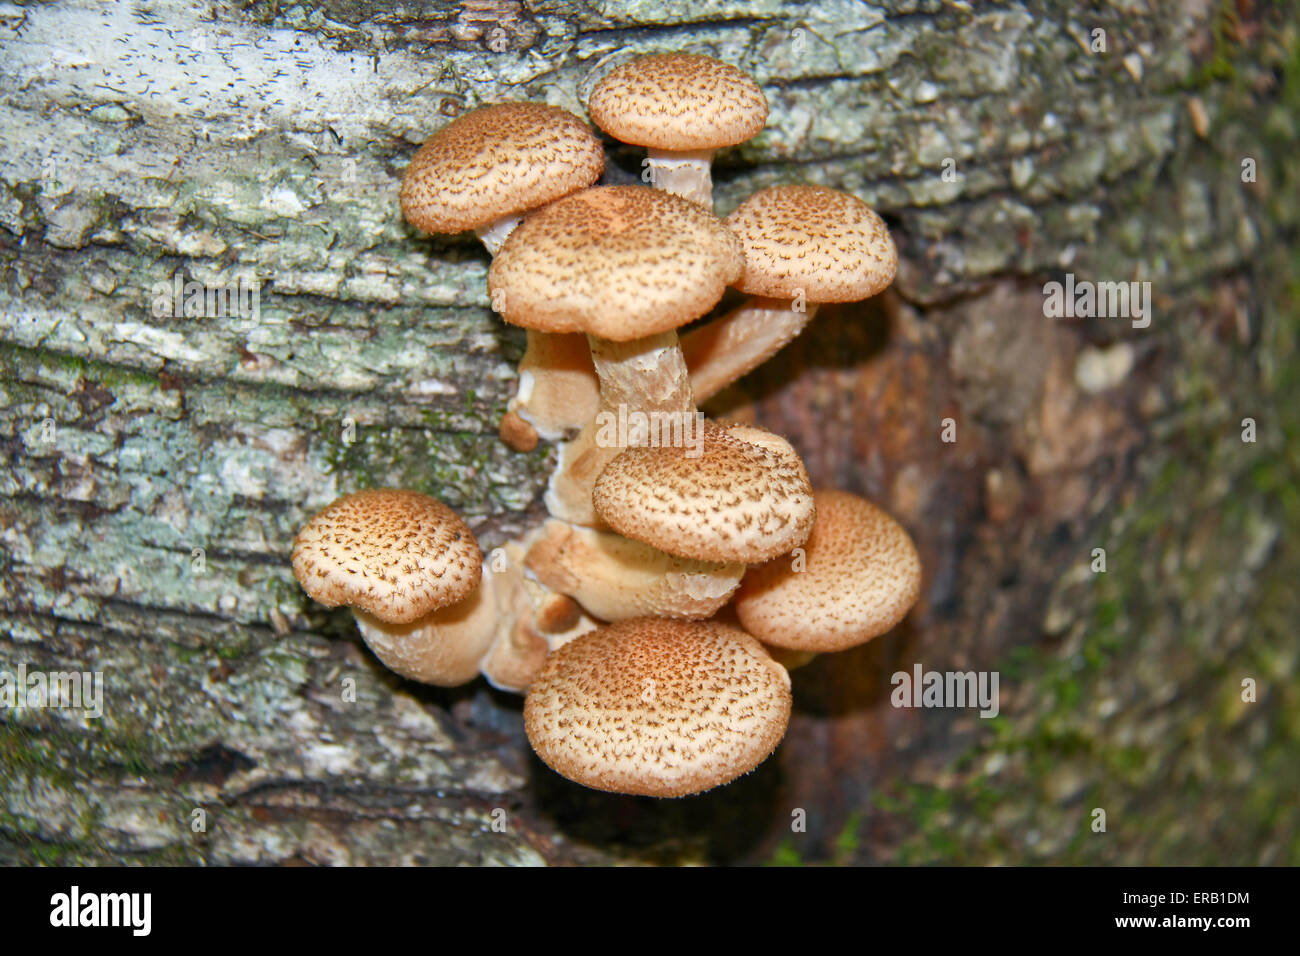 Young edible mushrooms - Armillariella mellea. Stock Photo